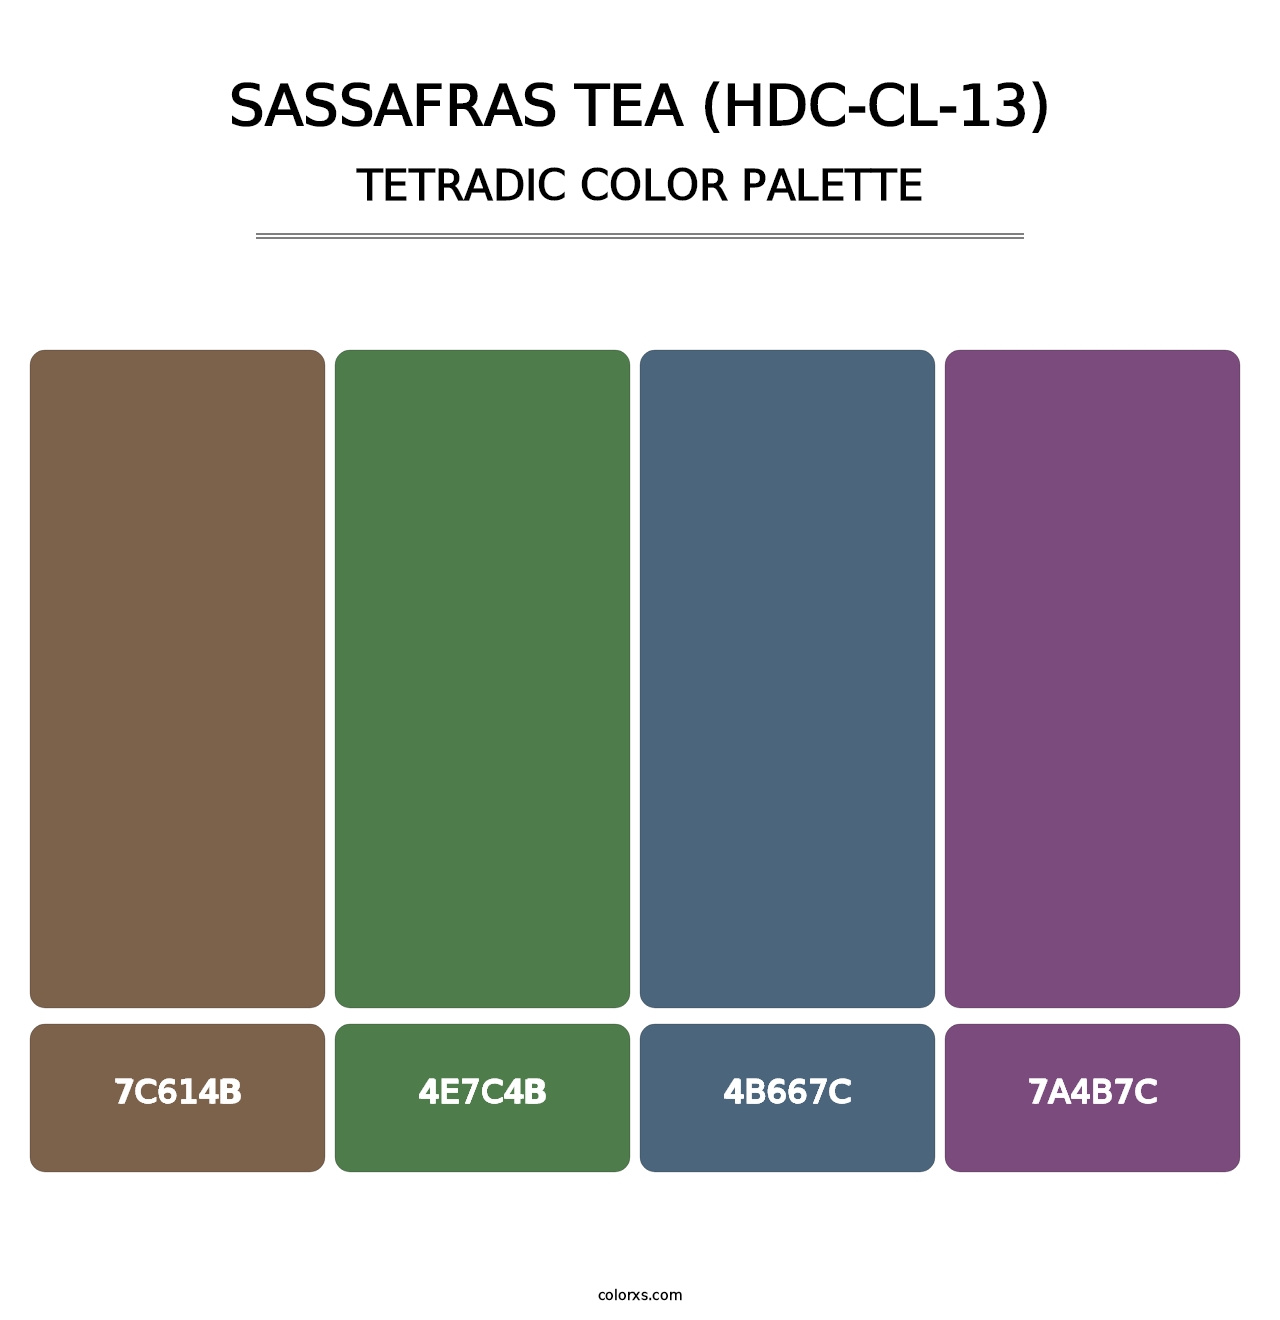 Sassafras Tea (HDC-CL-13) - Tetradic Color Palette